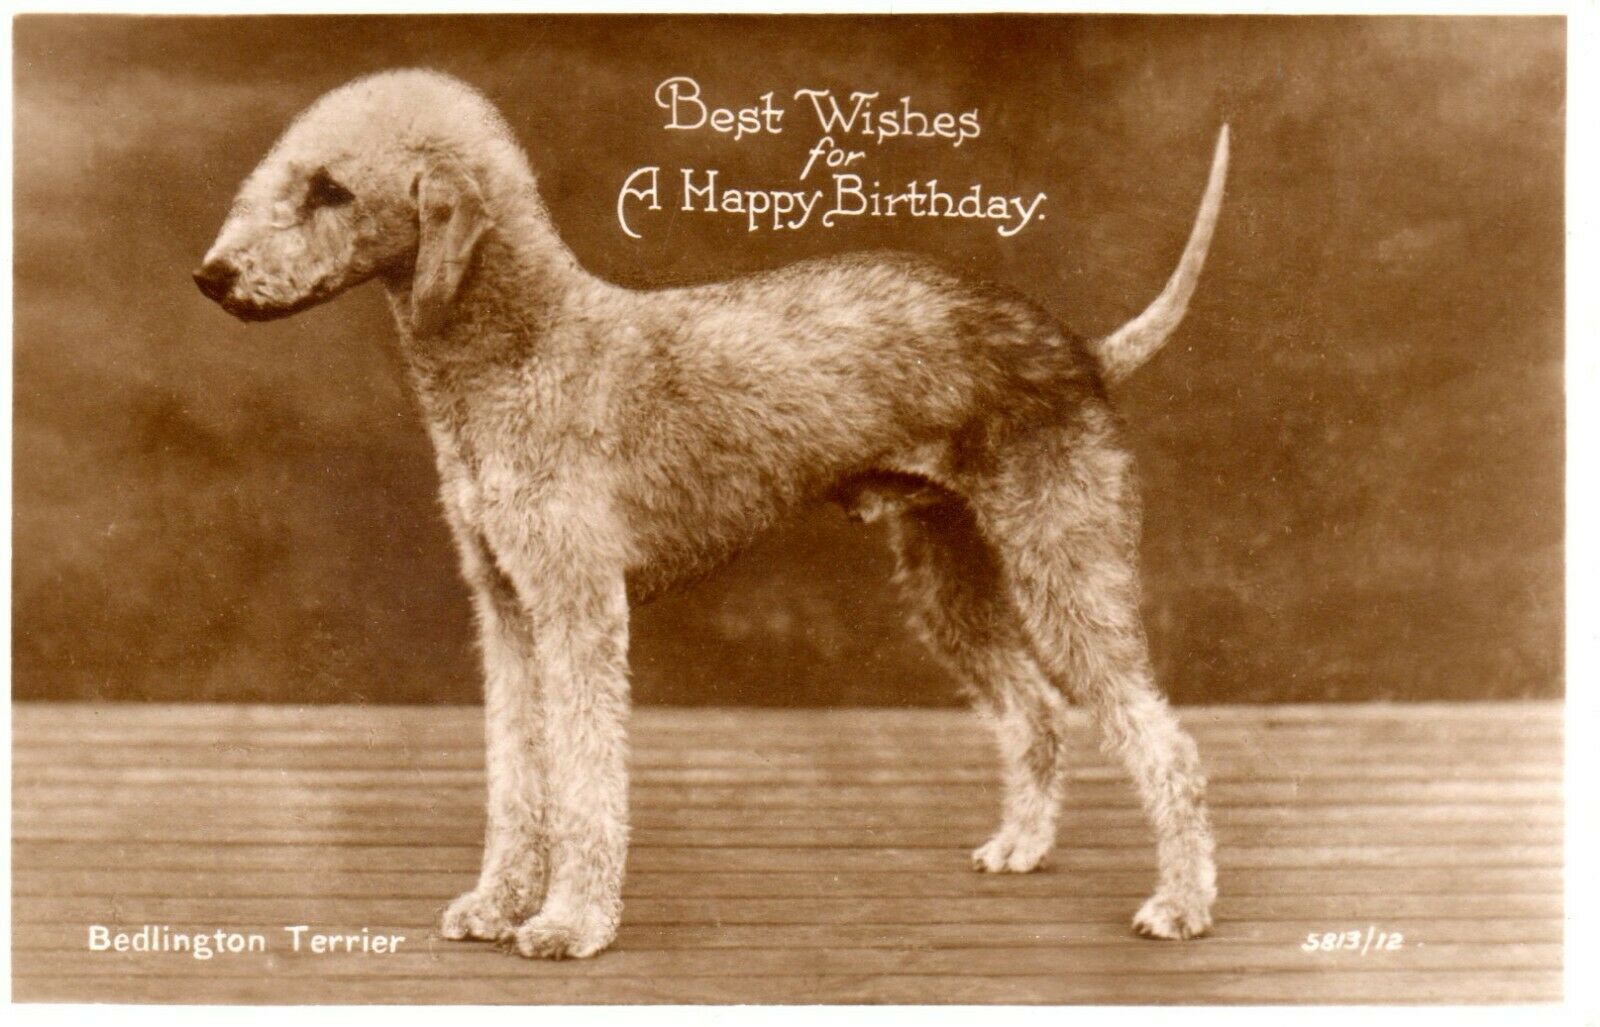 BEDLINGTON TERRIER - HAPPY BIRTHDAY c1950 RP DOG POSTCARD VGC